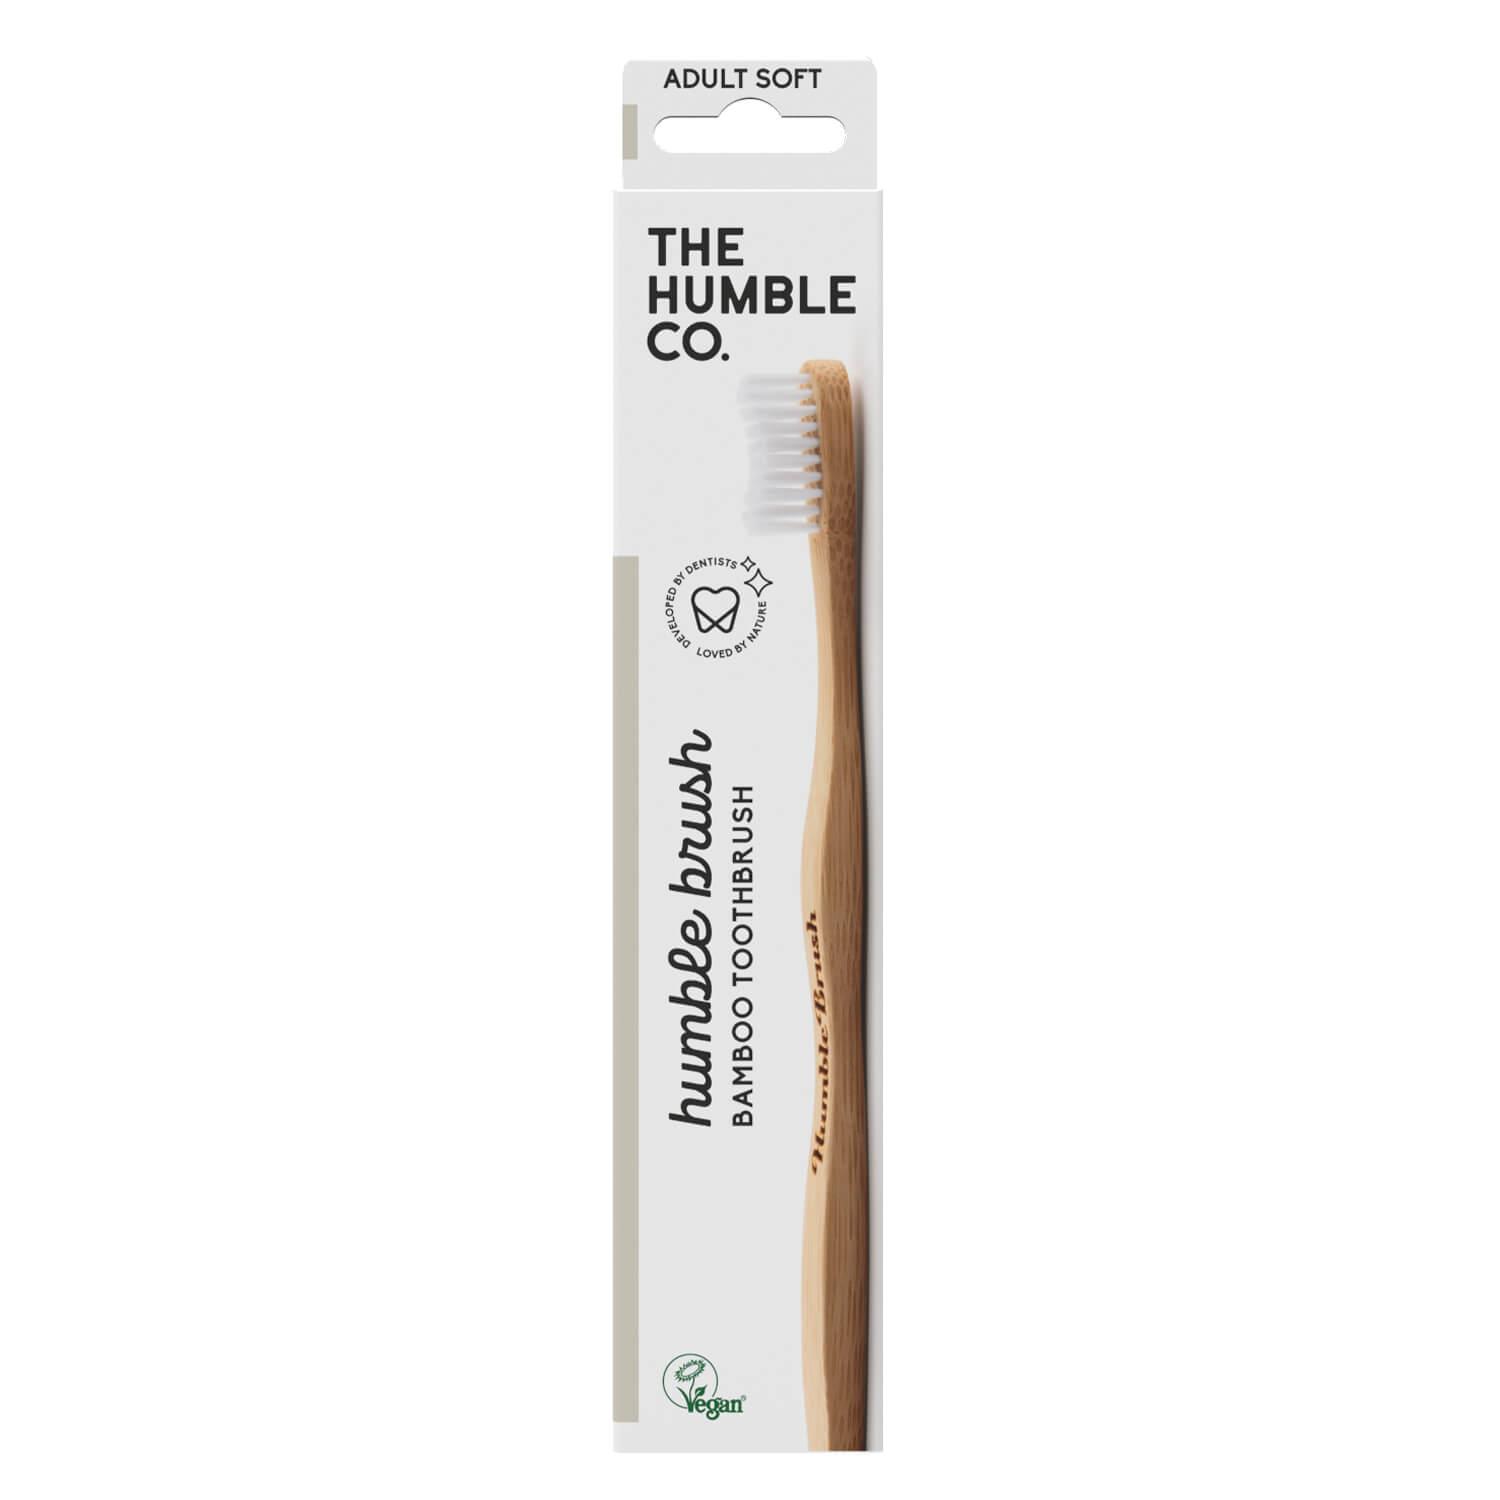 THE HUMBLE CO. - Humble Brush Zahnbürste Erwachsene Weiss